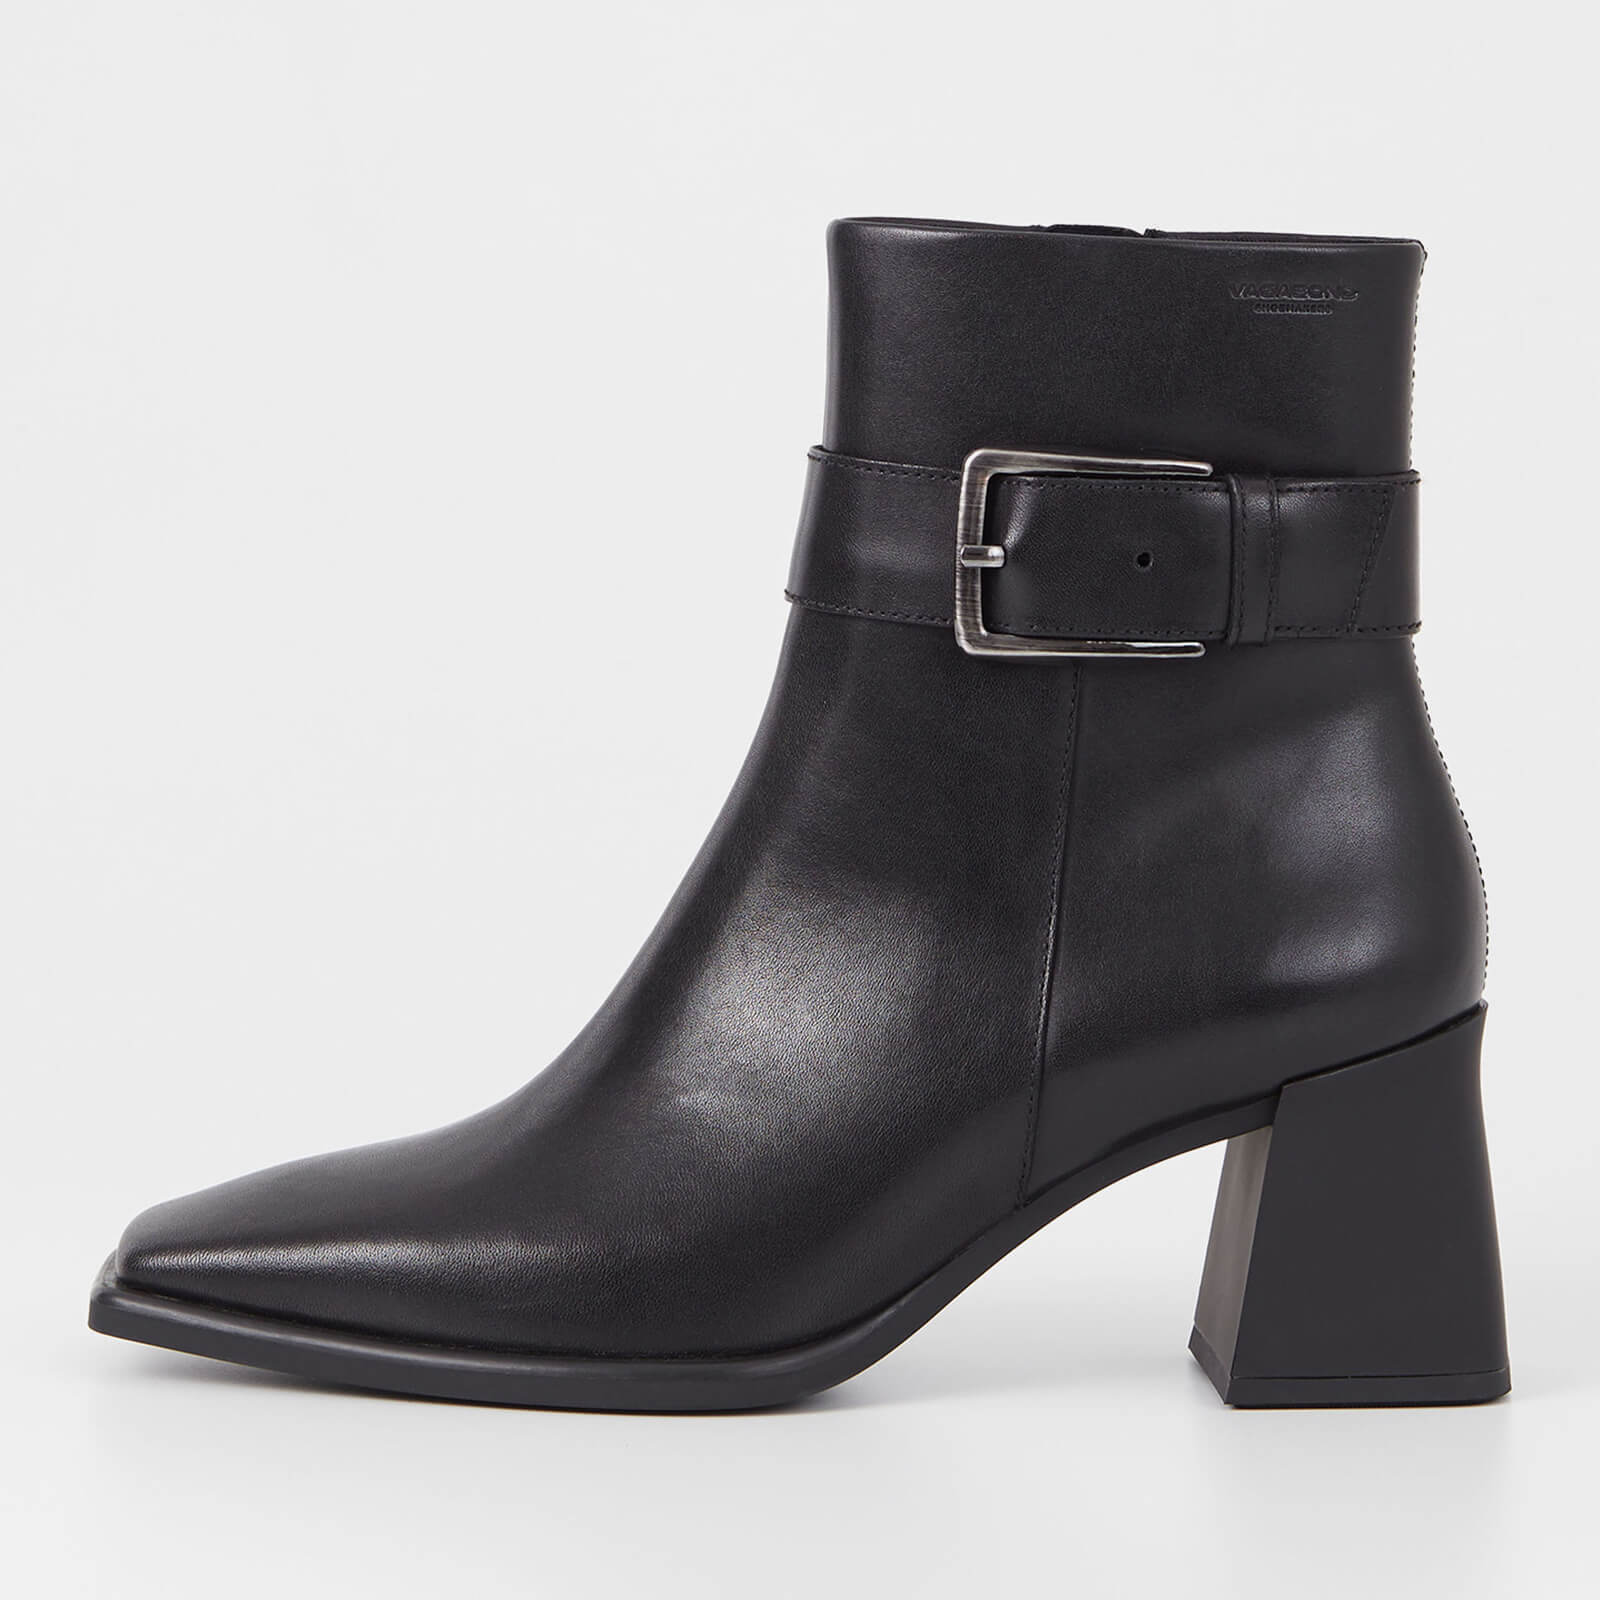 Vagabond Women’s Hedda Buckle Leather Heeled Boots